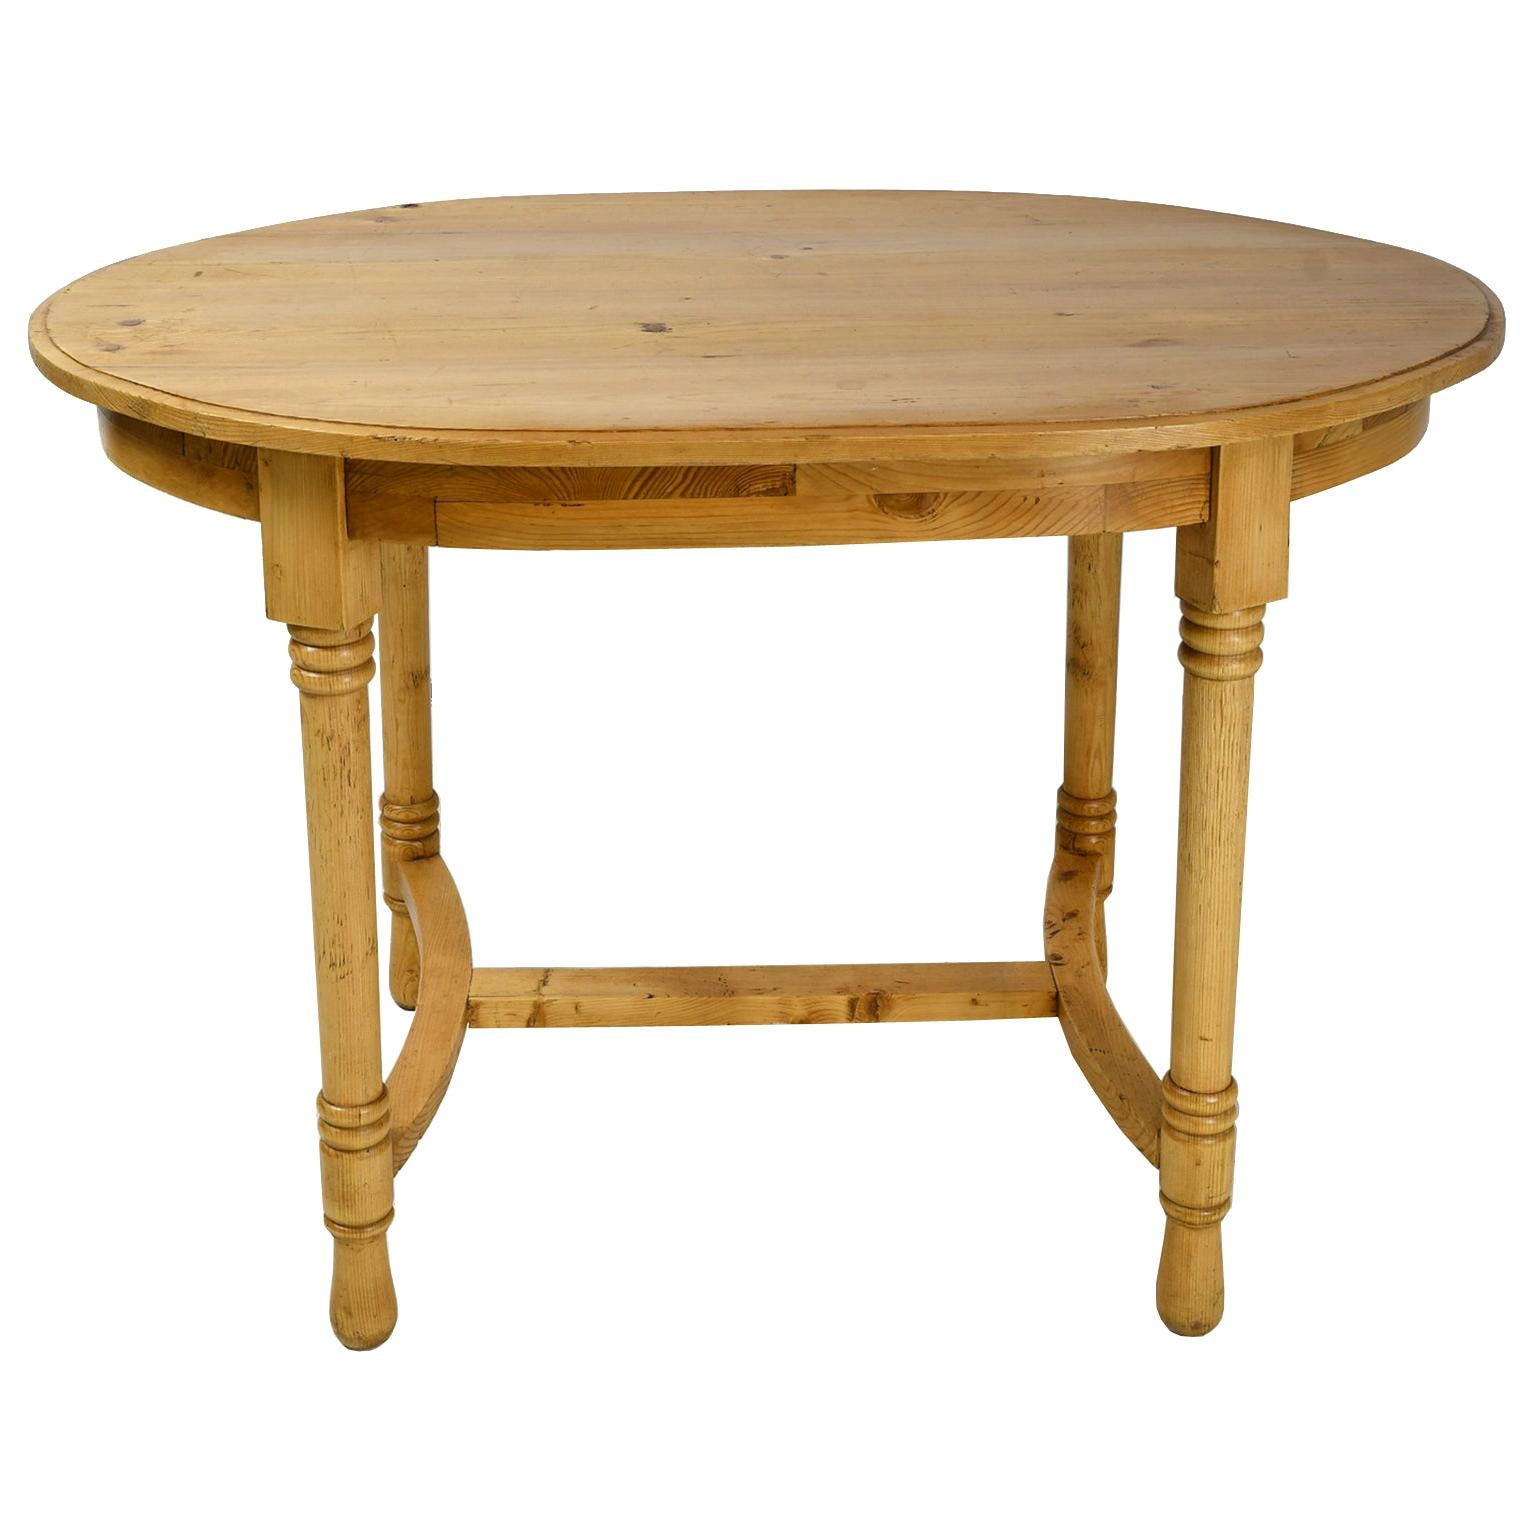 Antique European Oval Table in Pine, Danish or German, circa 1900